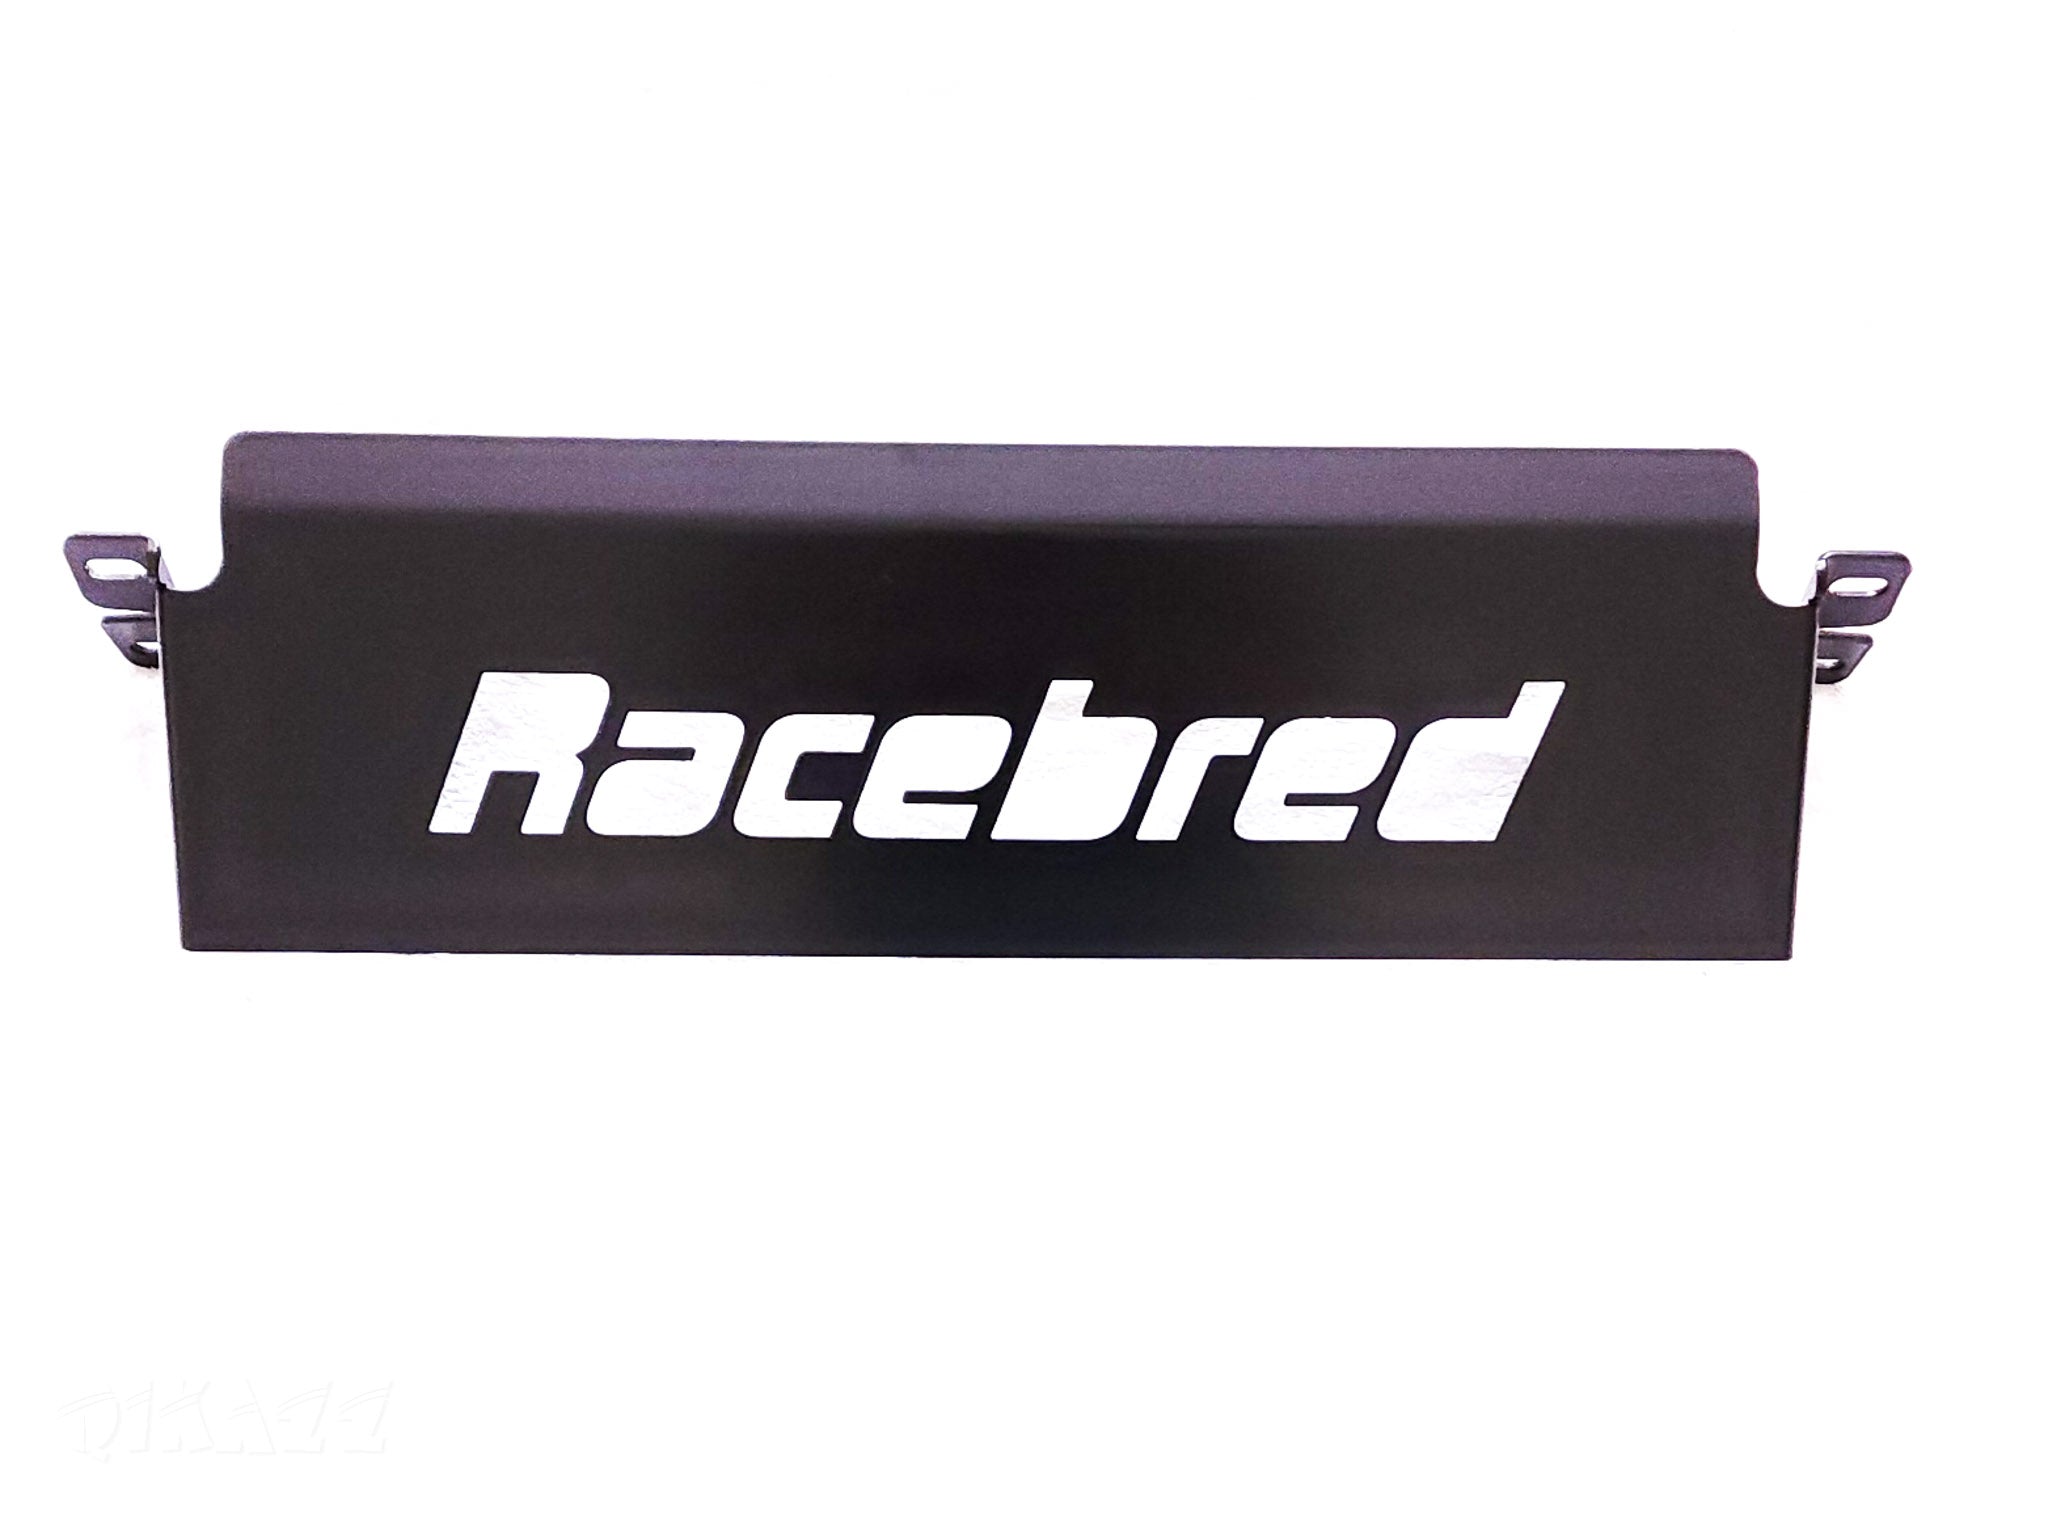 Racebred 4wd Bash Plate for Nissan Patrol GQ / GU | Racebred 4wd